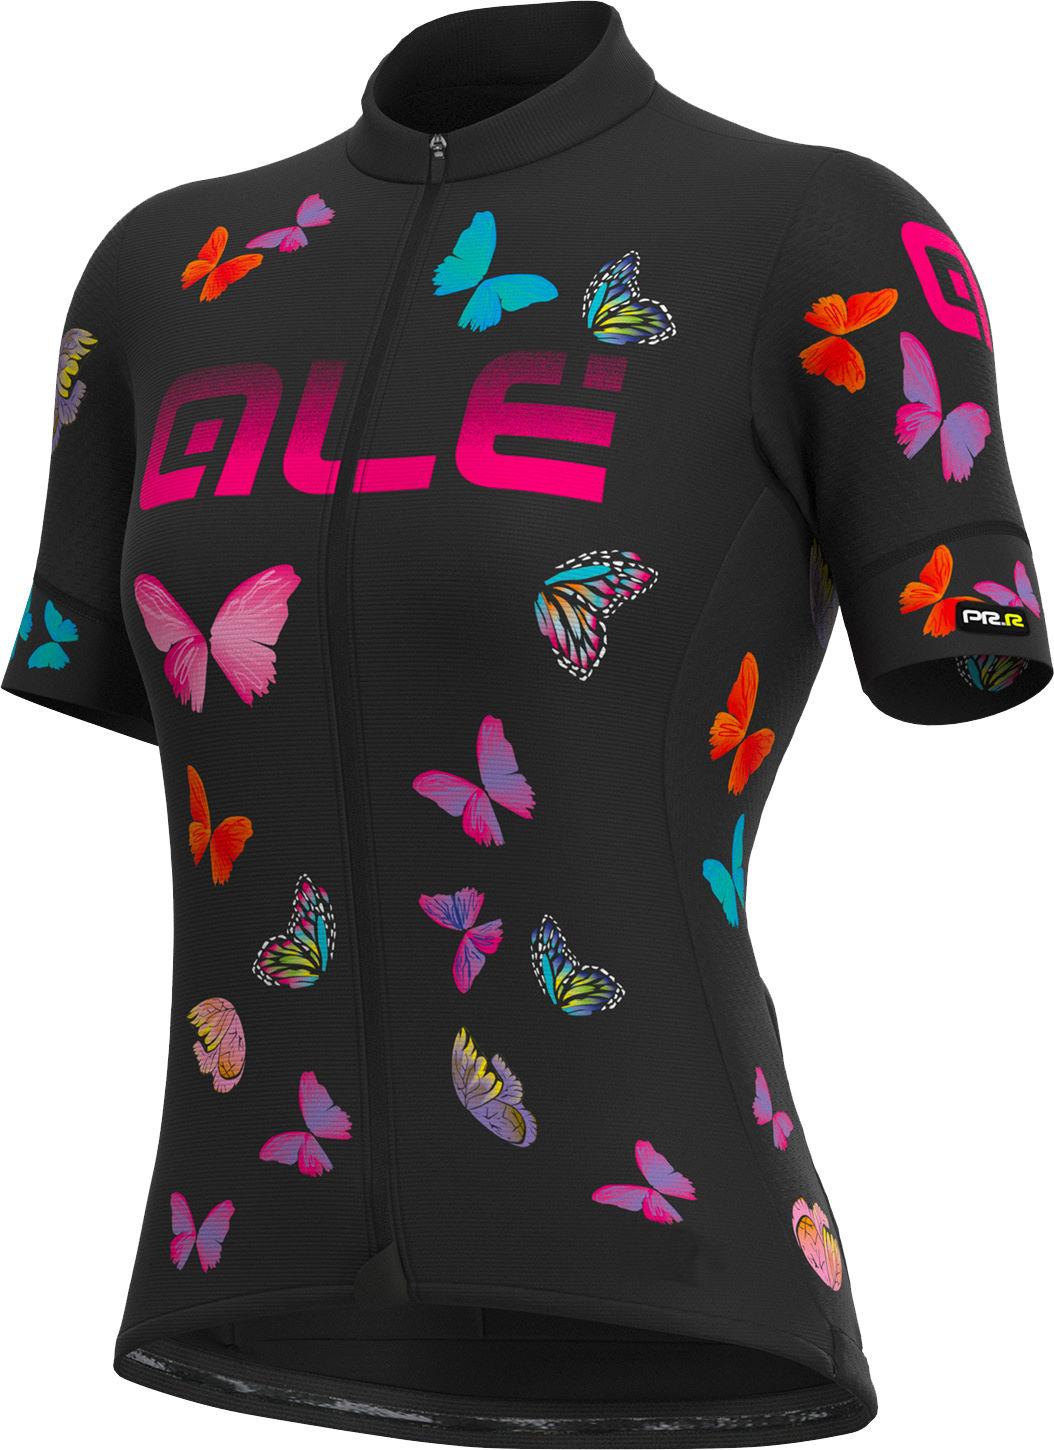 Al Womens Prr Butterfly Cycling Jersey - Black/pink